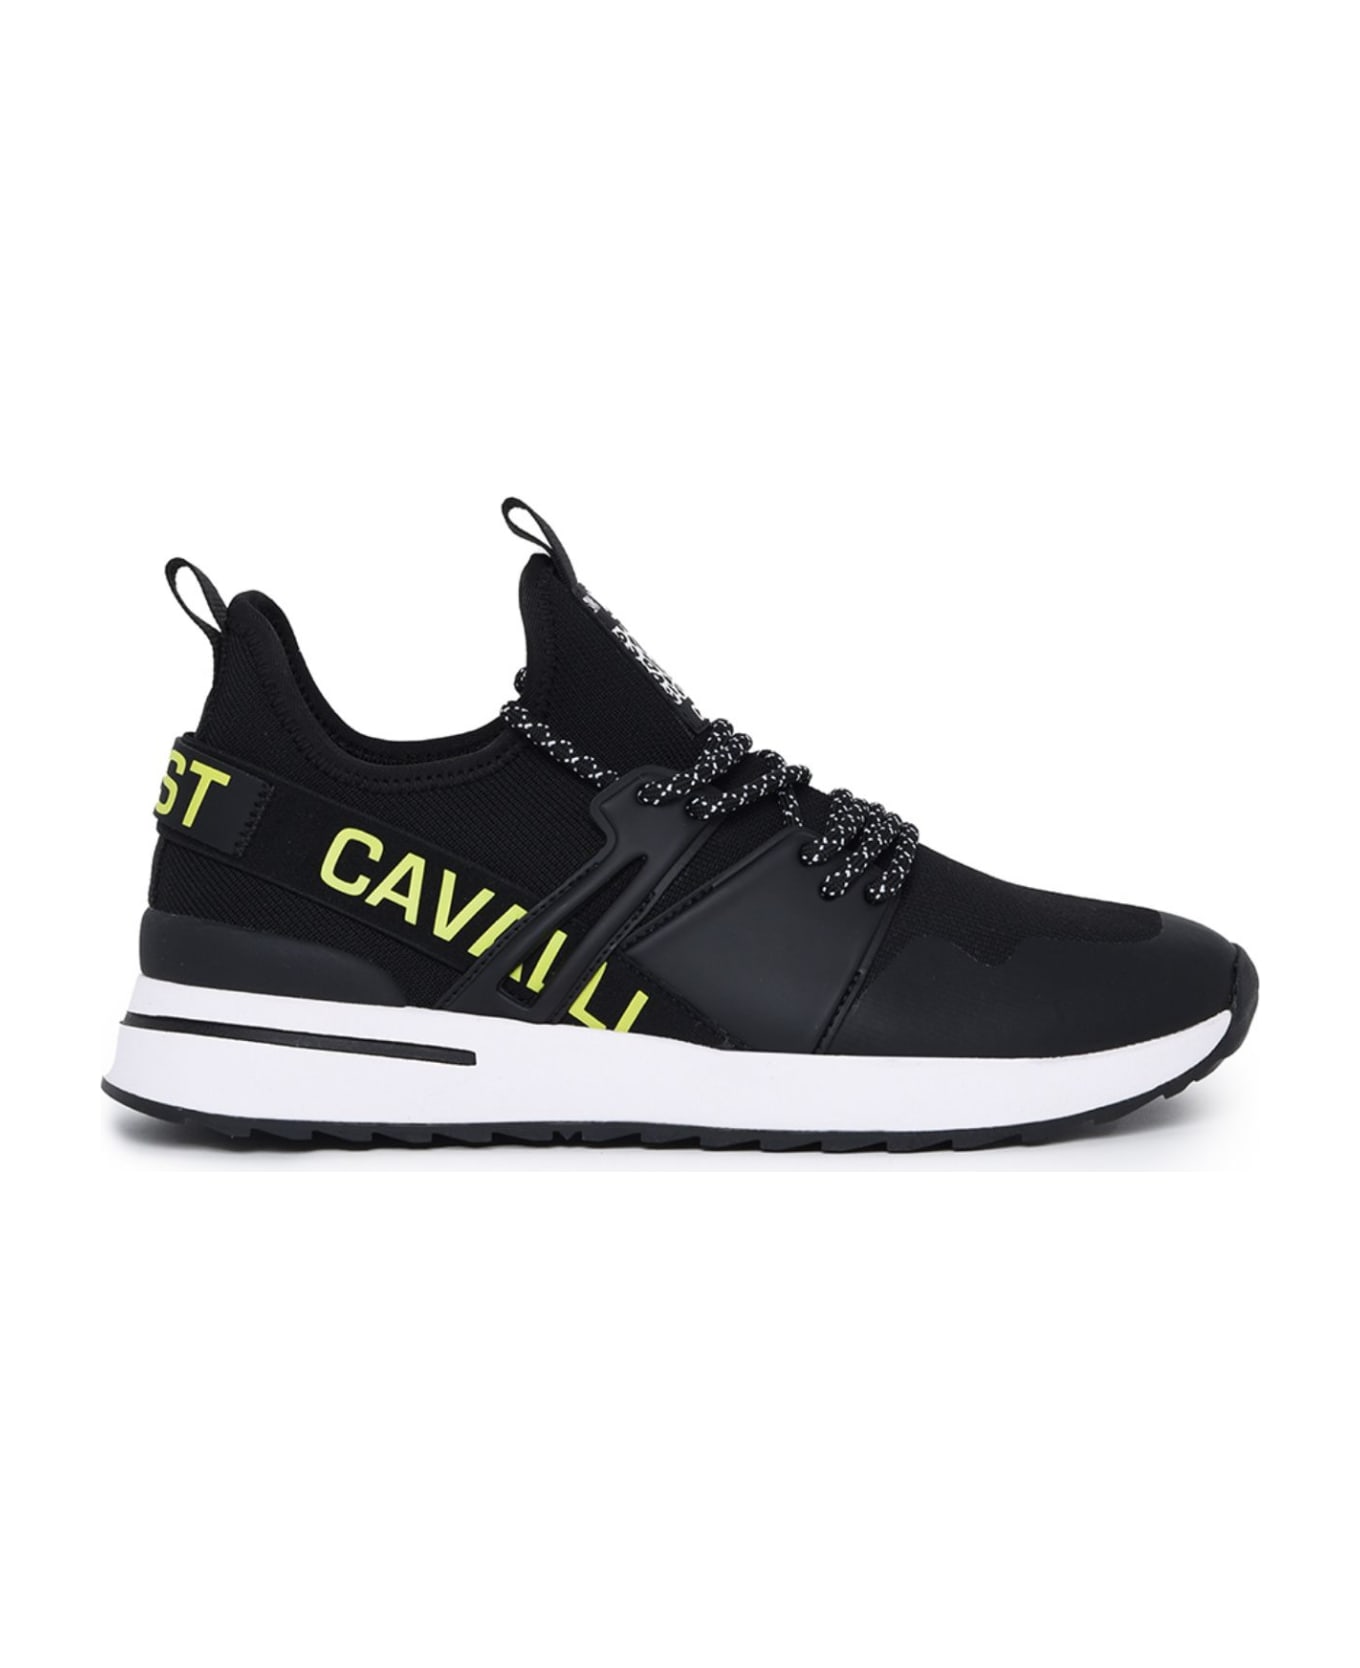 Just Cavalli Shoes - Black